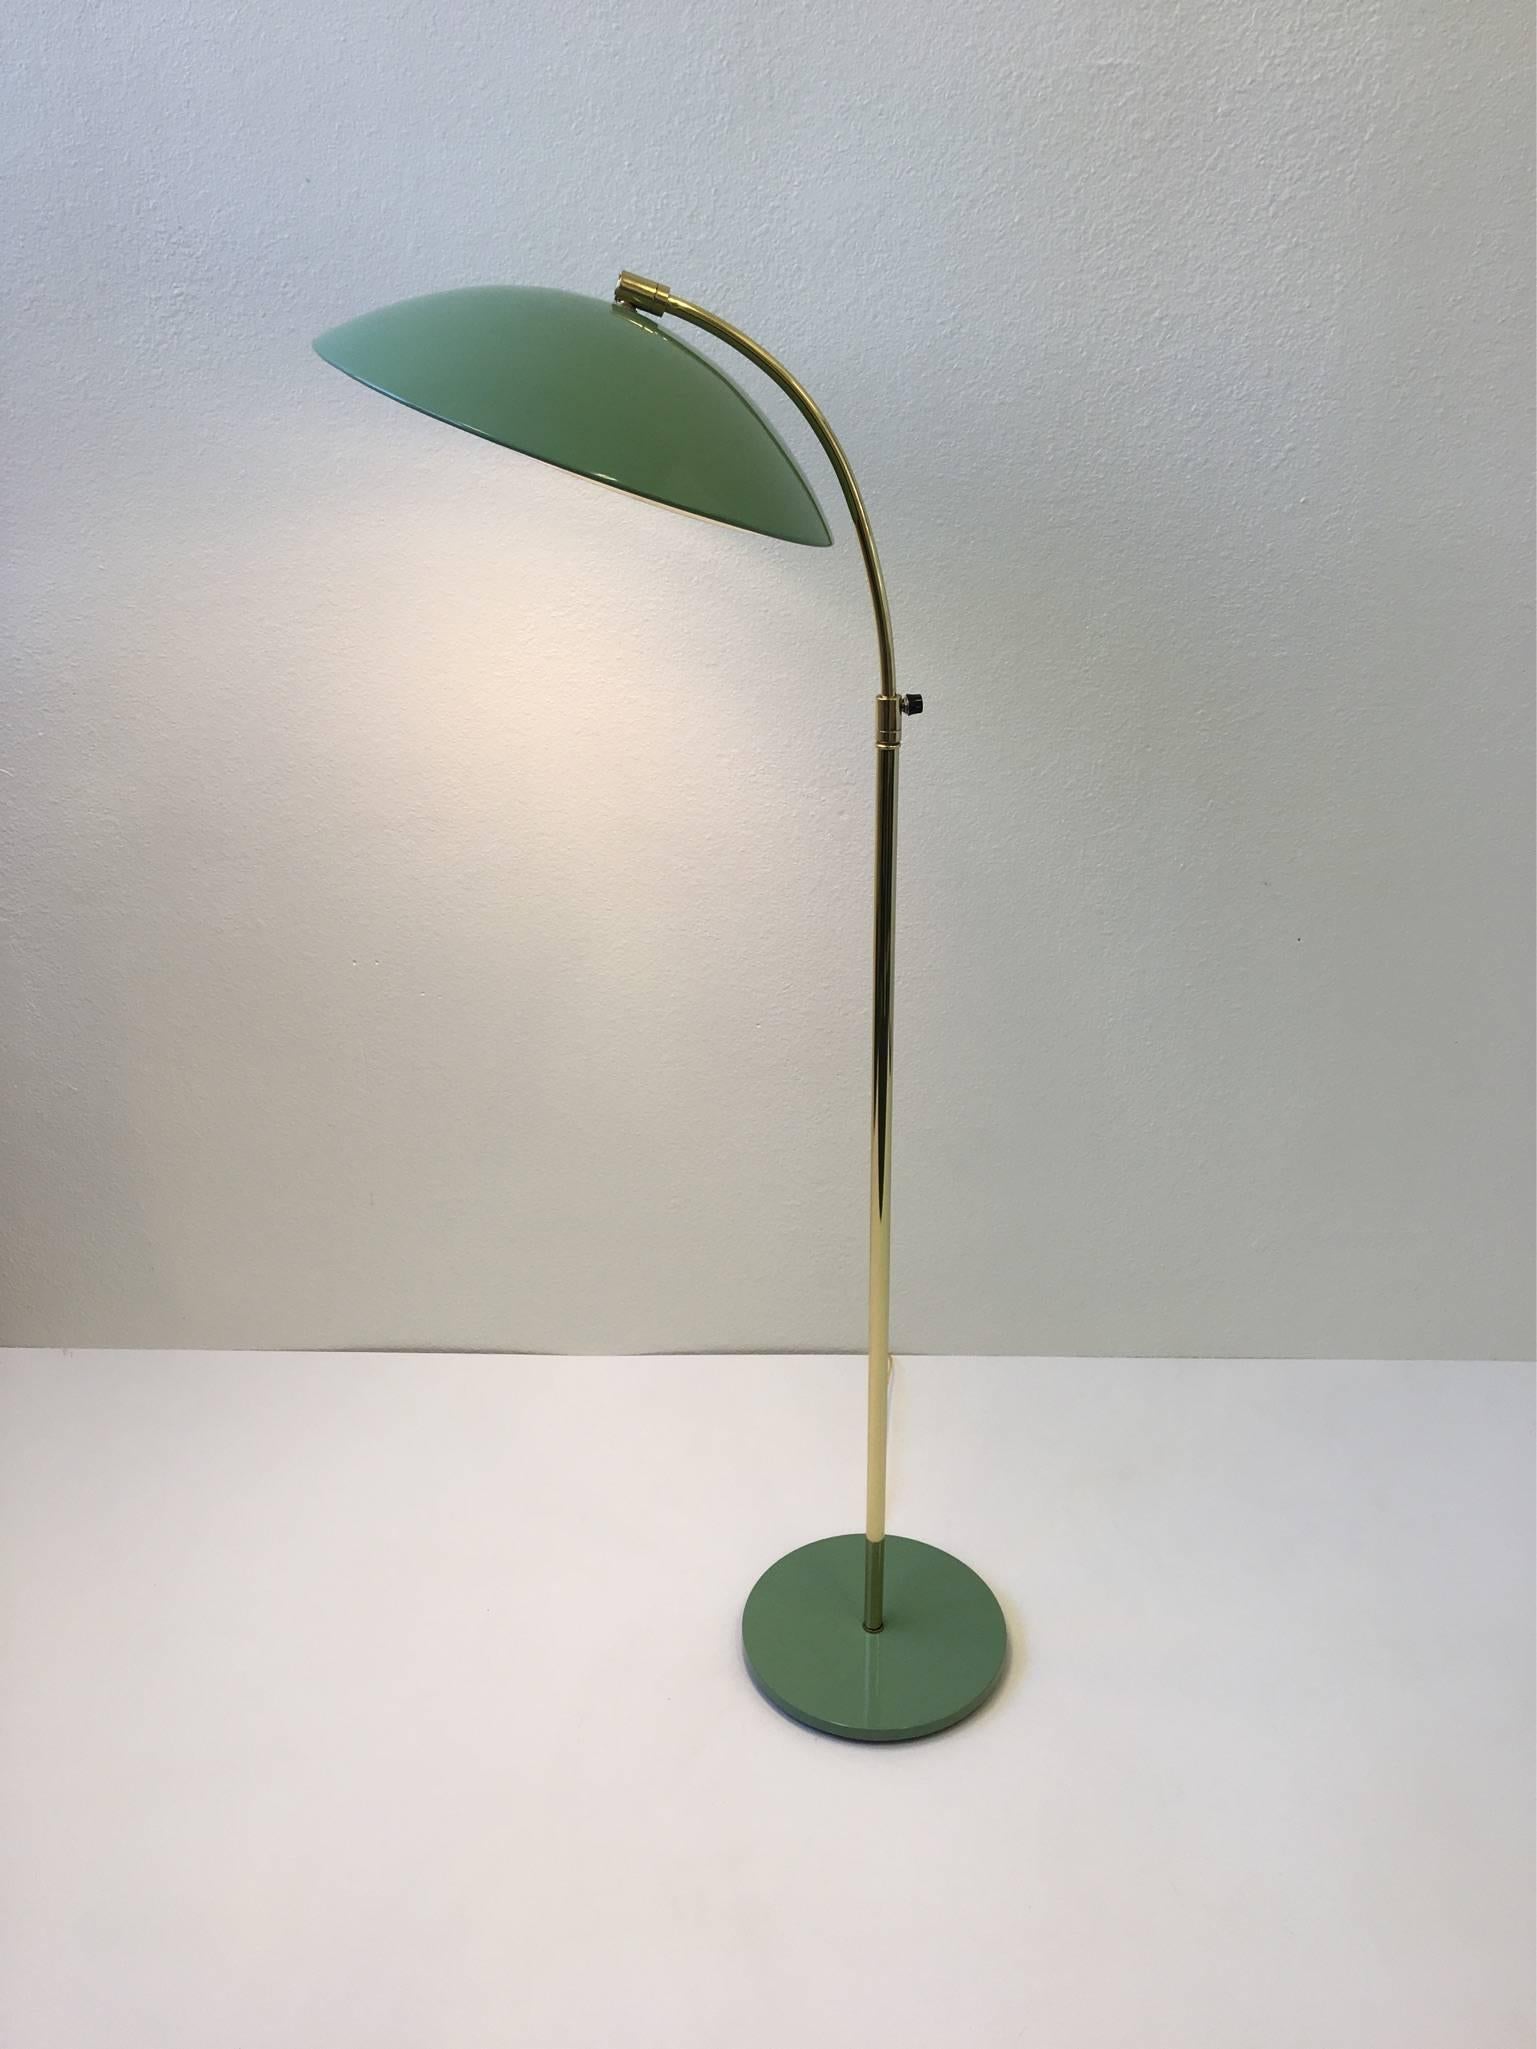 American Brass and Lacquered Fern Green Adjustable Floor Lamp by Kurt Versen